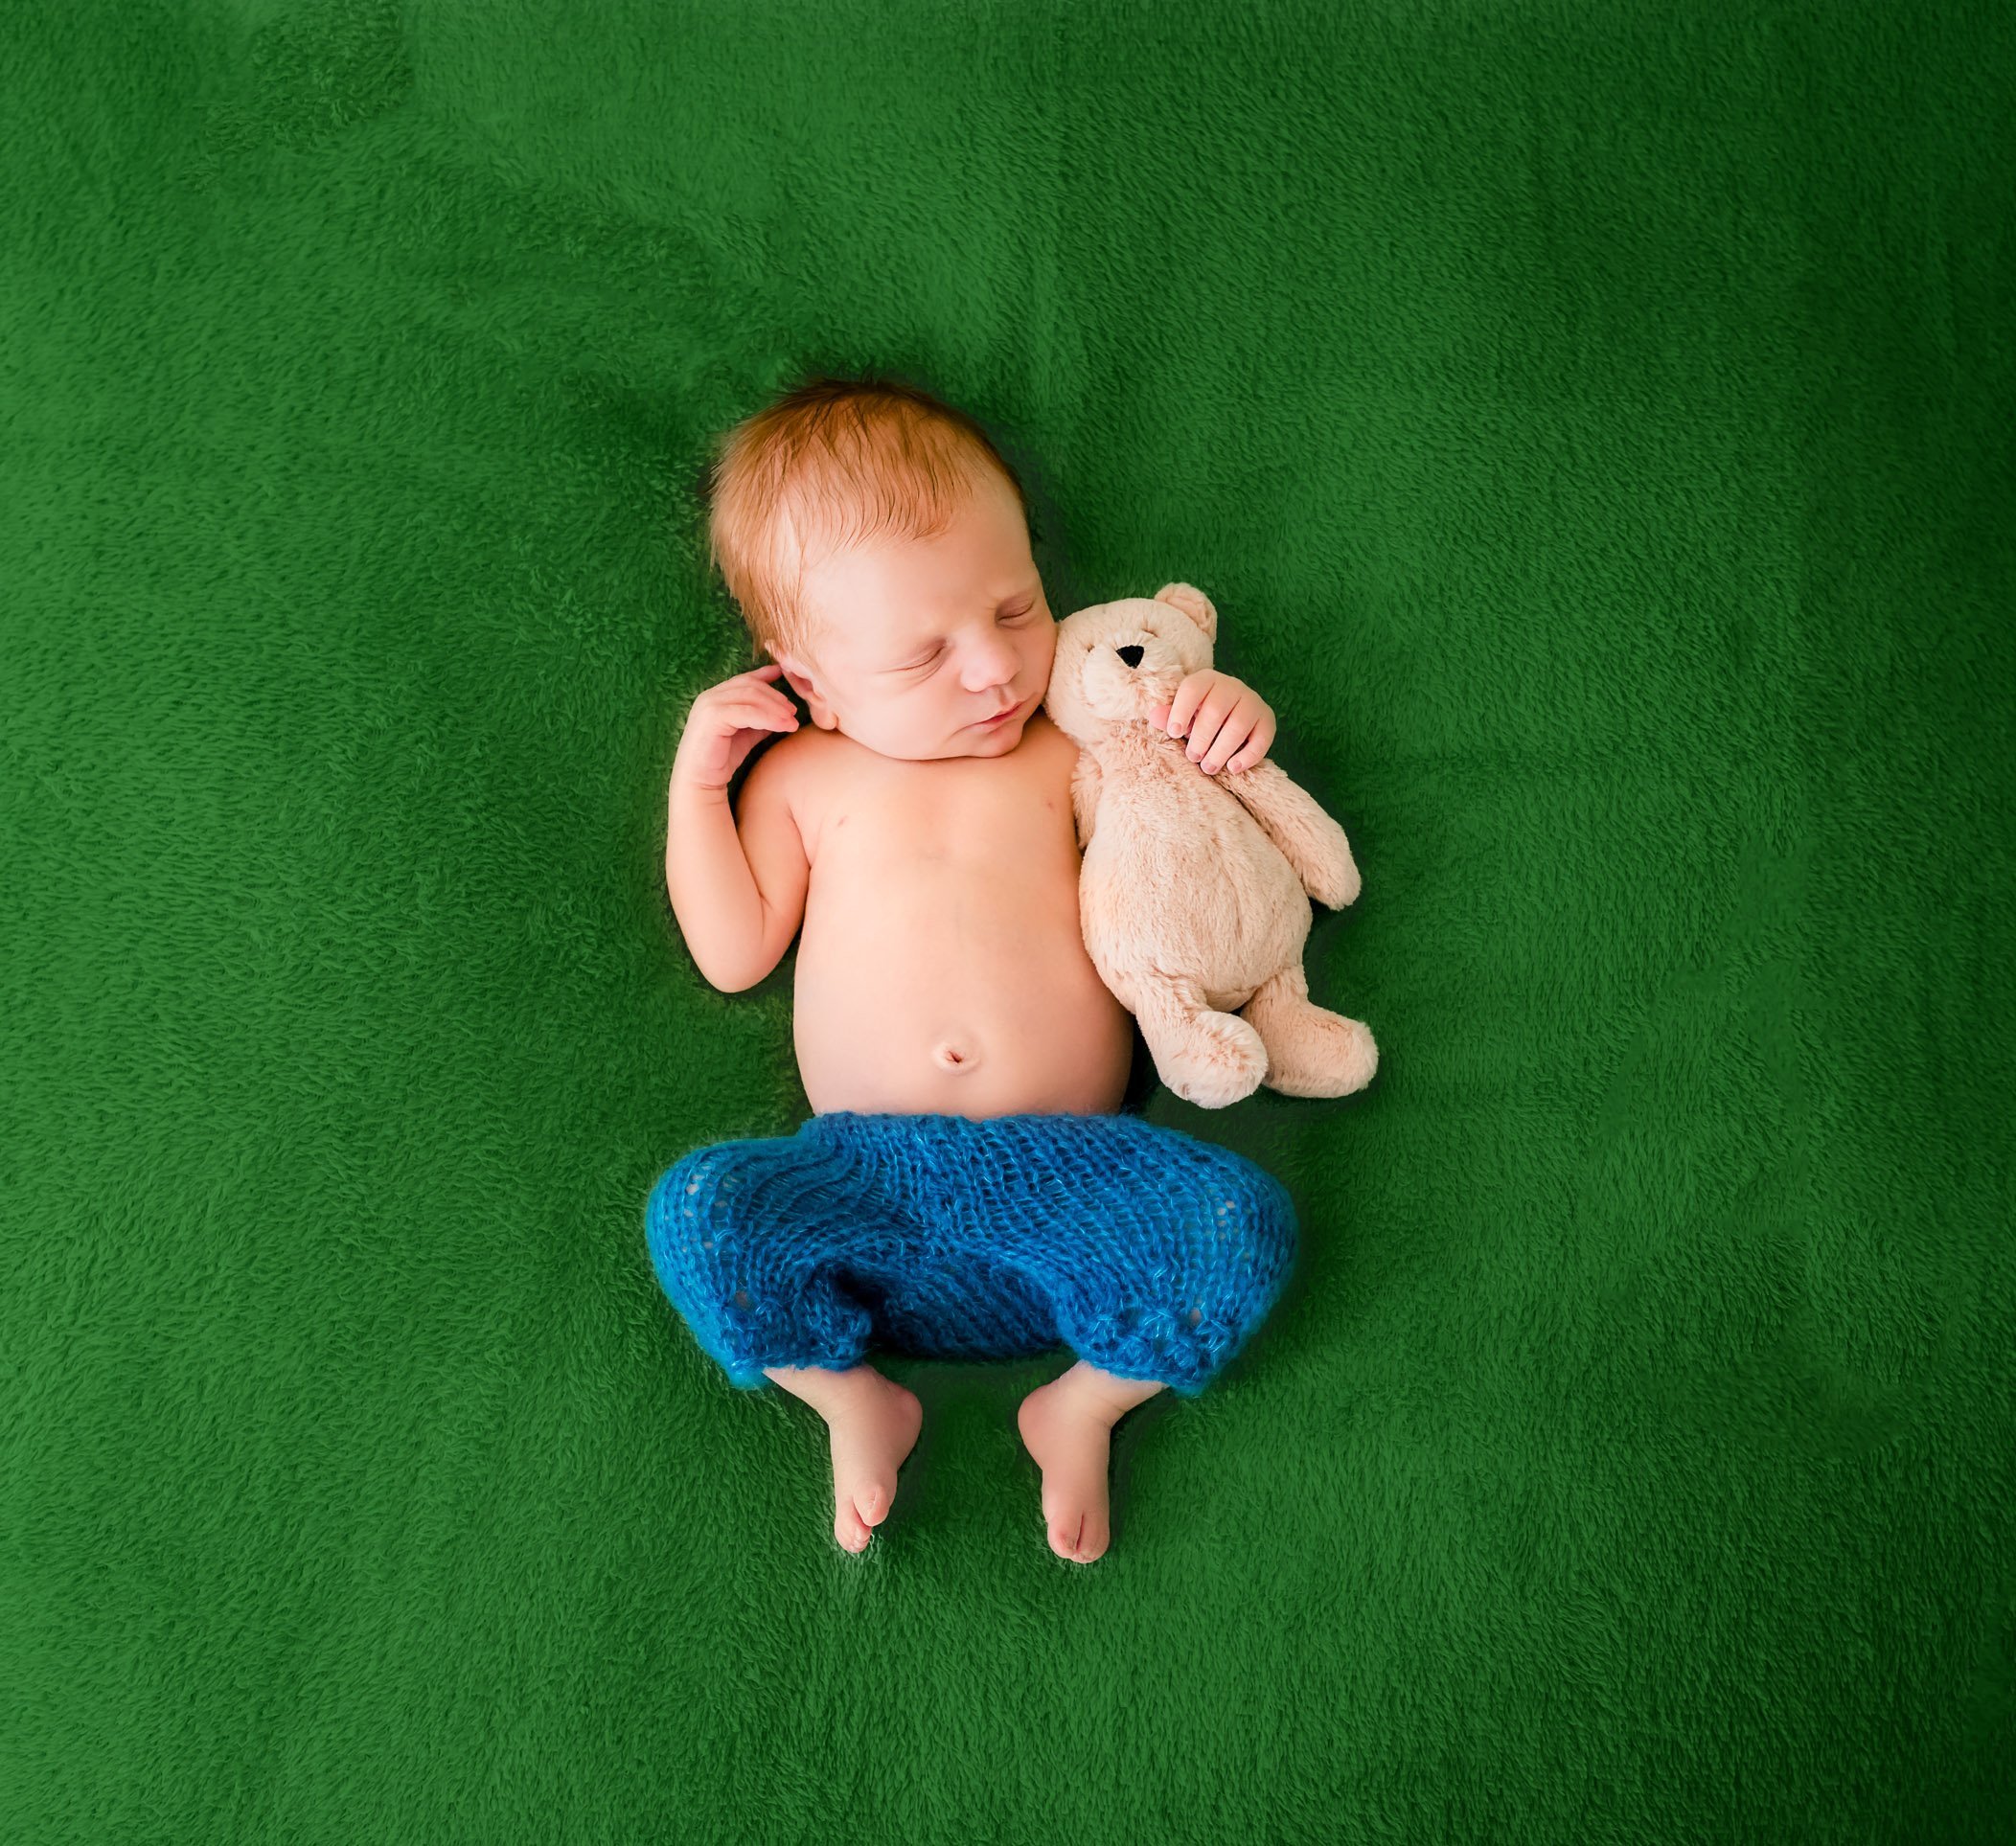 red-headed newborn boy in blue pants sleeping on green blanket with teddy bear